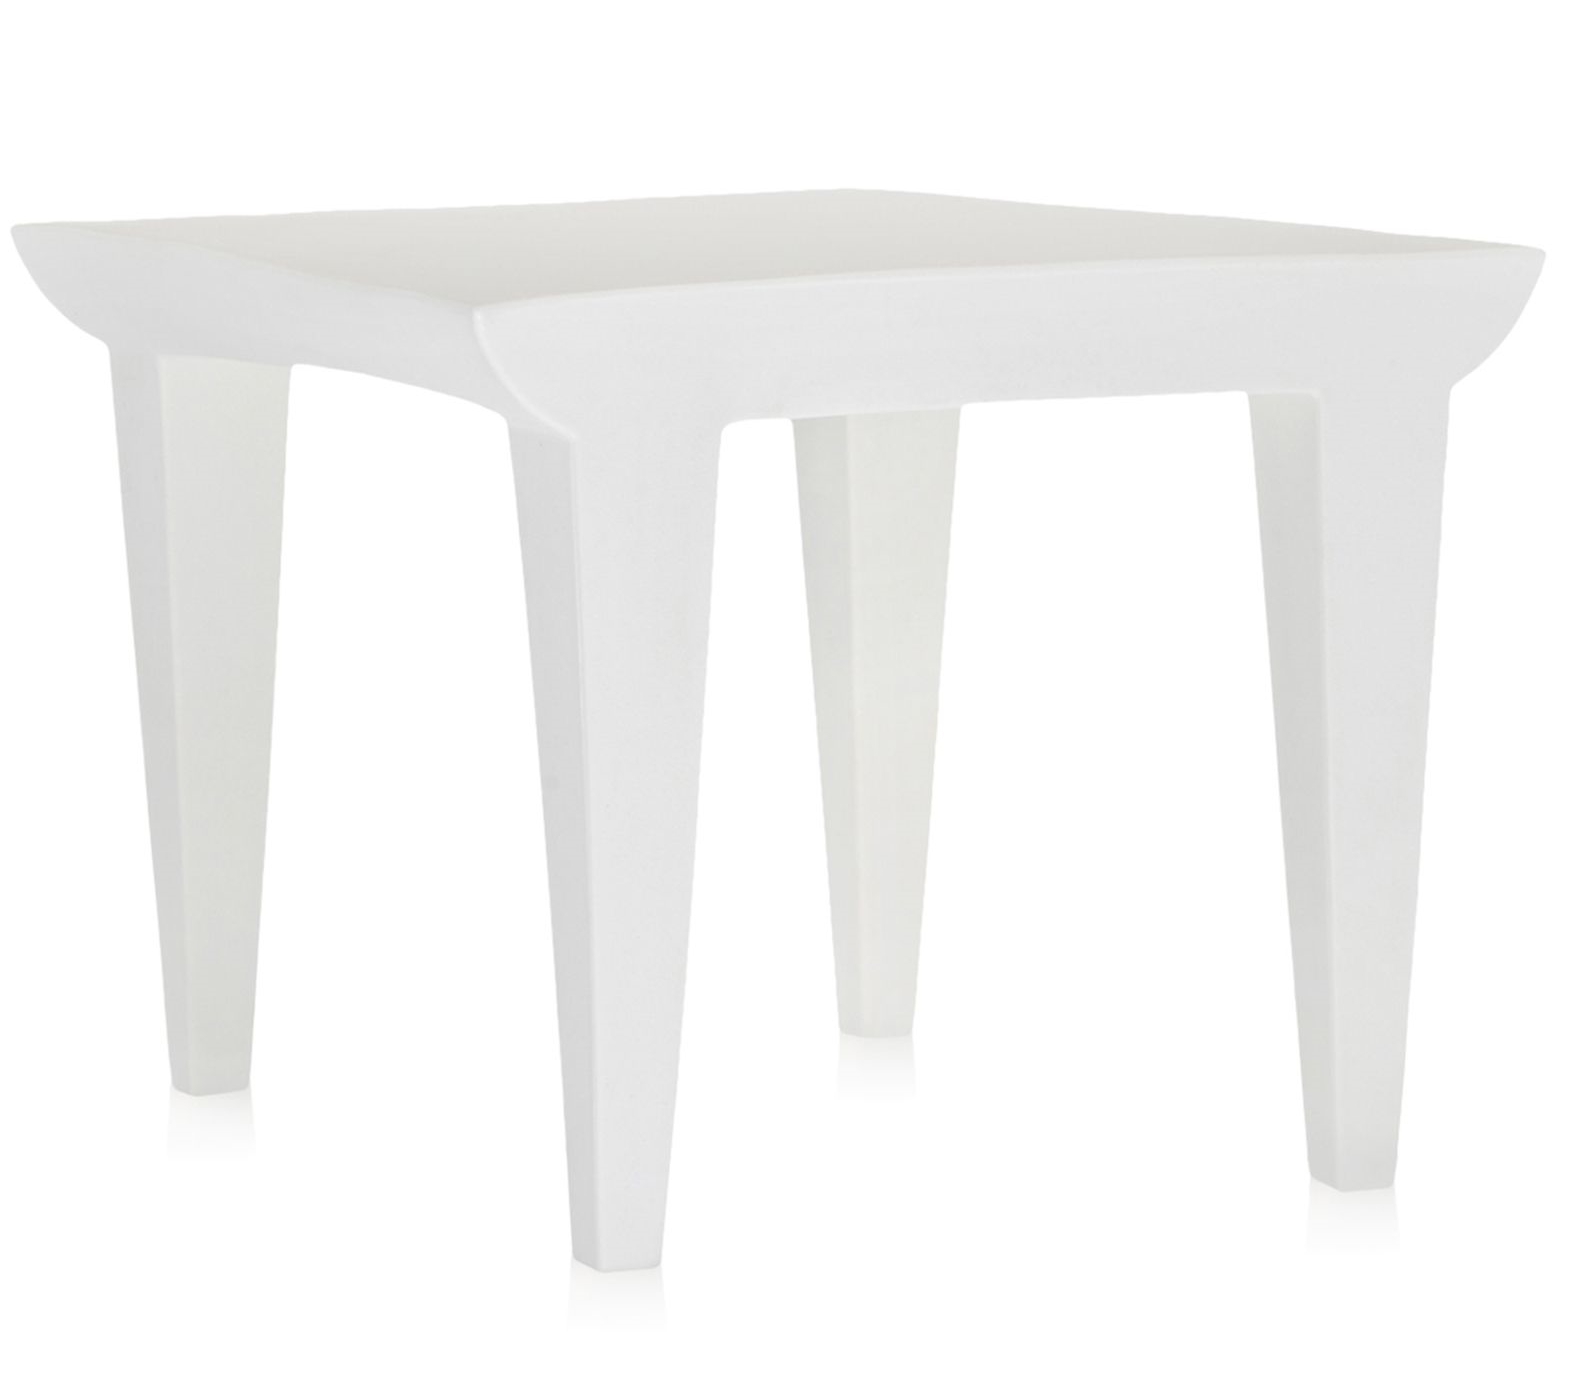 Masuta Kartell Bubble design Philippe Starck 51.5×51.5cm hx41.5cm alb zinc 51.5x51.5cm